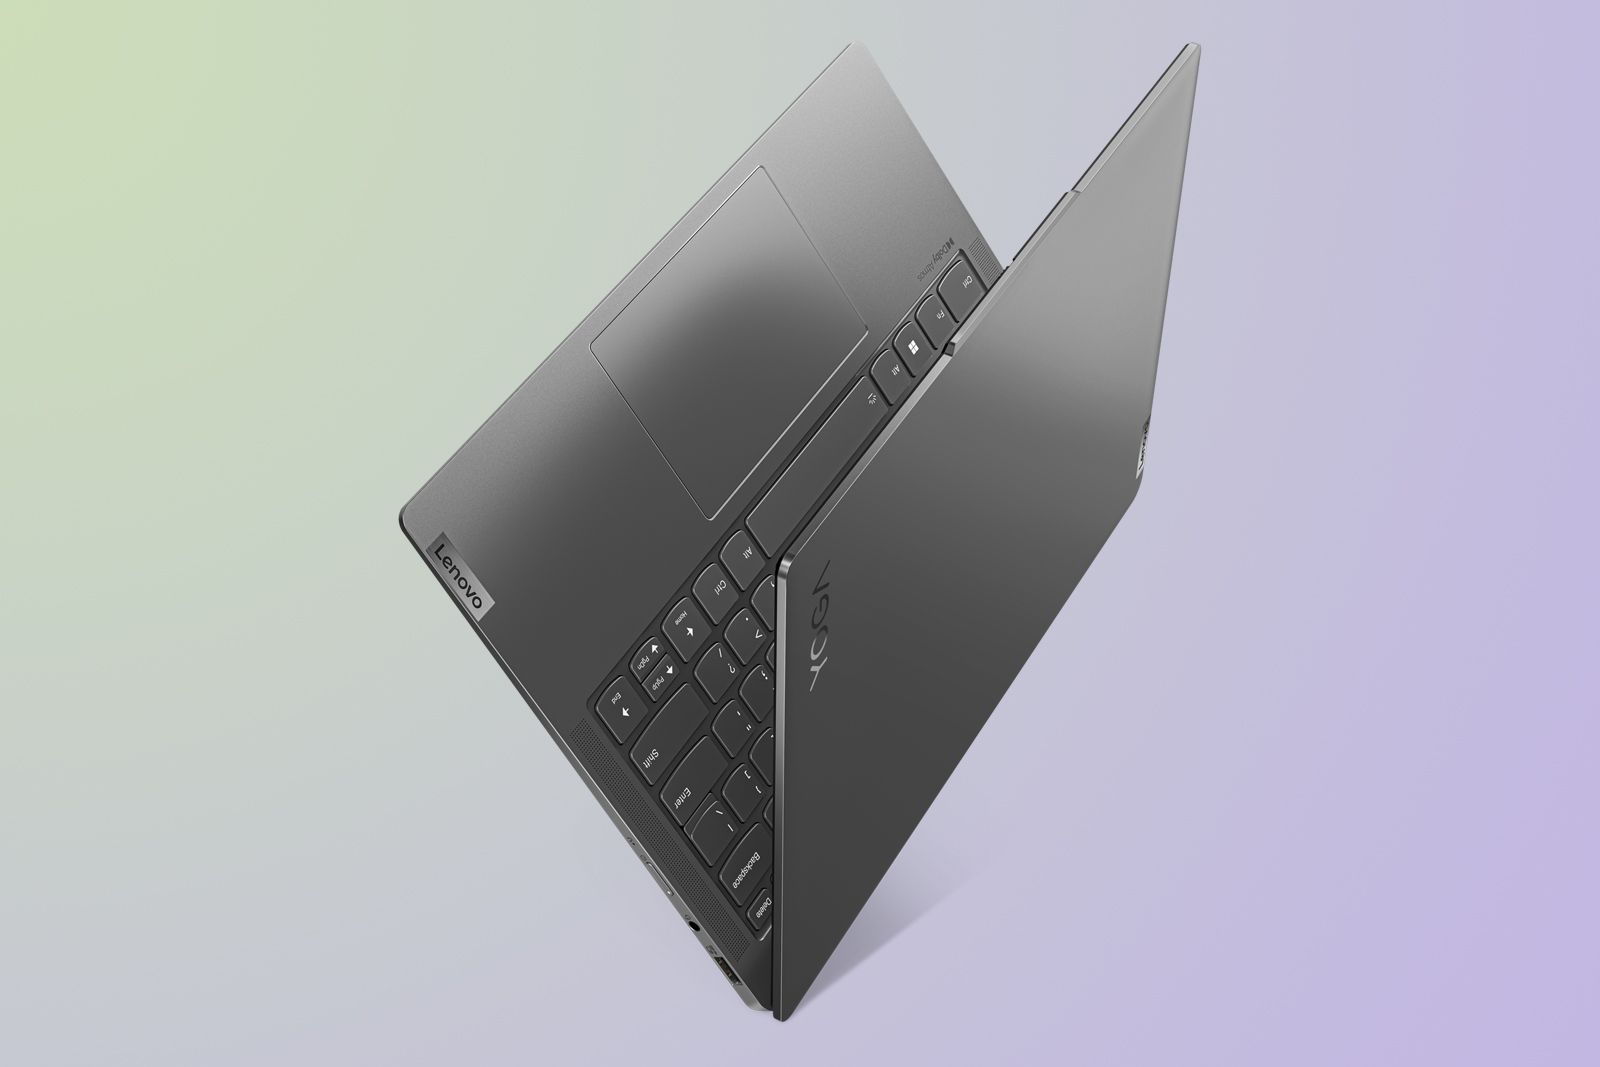 Lenovo's New Yoga Slim Laptops Are More Portable Than Ever